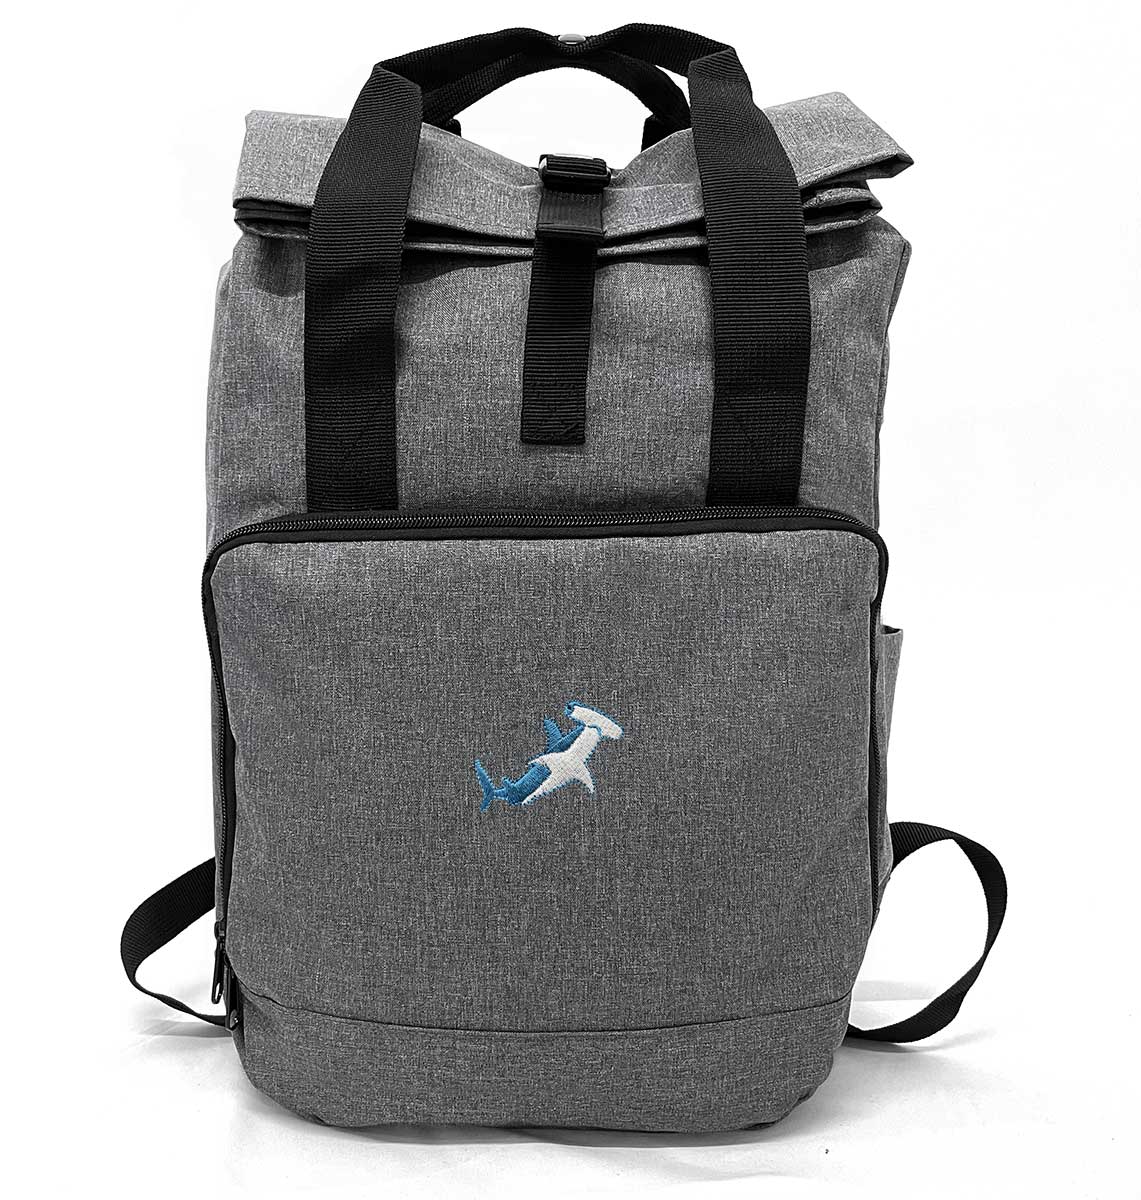 Hammerhead Shark Large Roll-top Laptop Recycled Backpack - Blue Panda